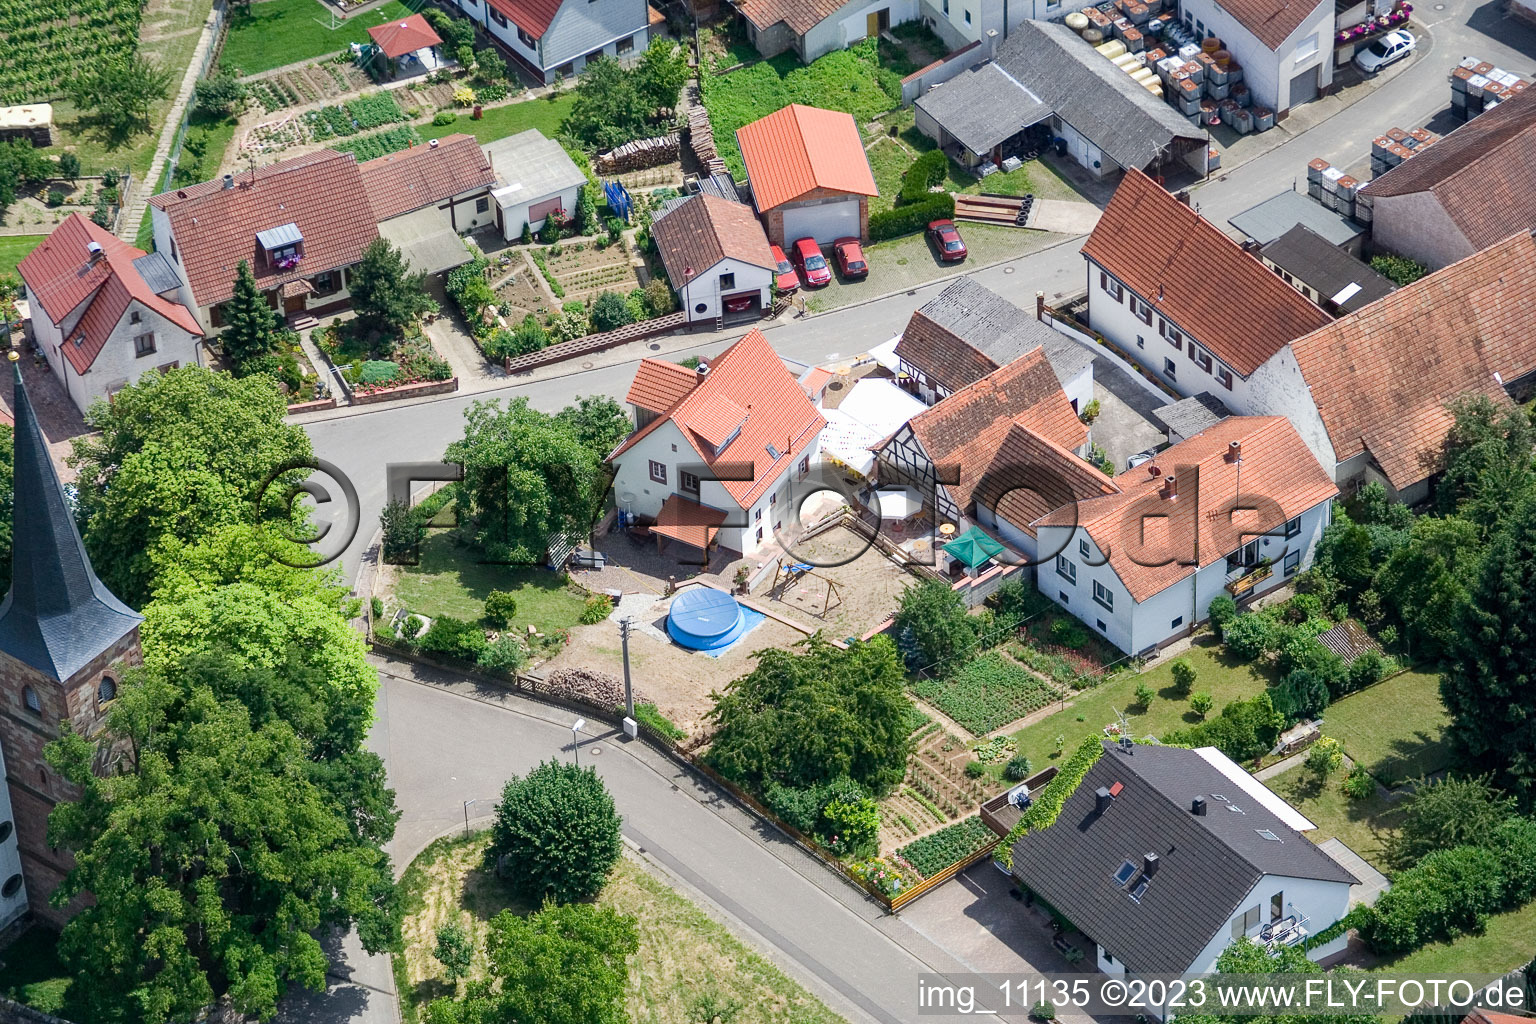 District Rechtenbach in Schweigen-Rechtenbach in the state Rhineland-Palatinate, Germany seen from a drone